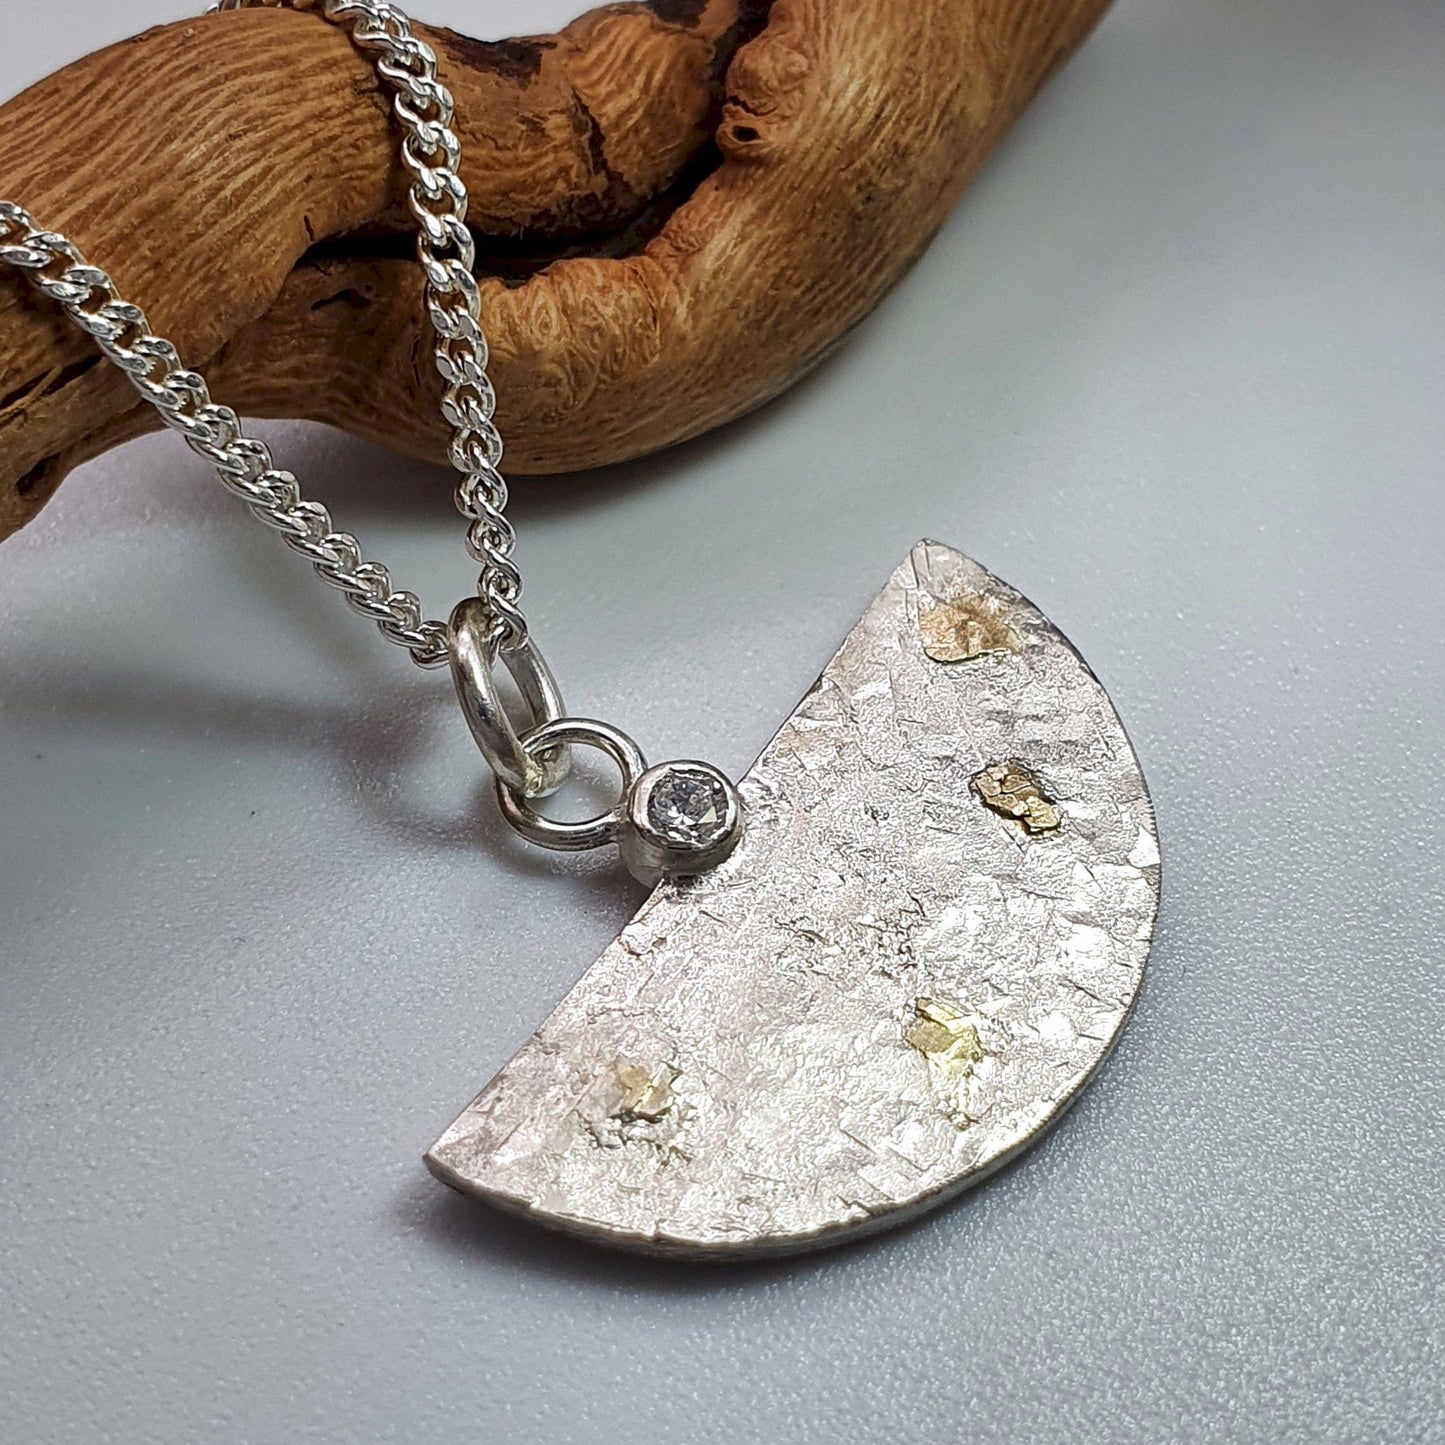 Diamond set silver and gold pendant, Morning View half circle design - Cumbrian Designs